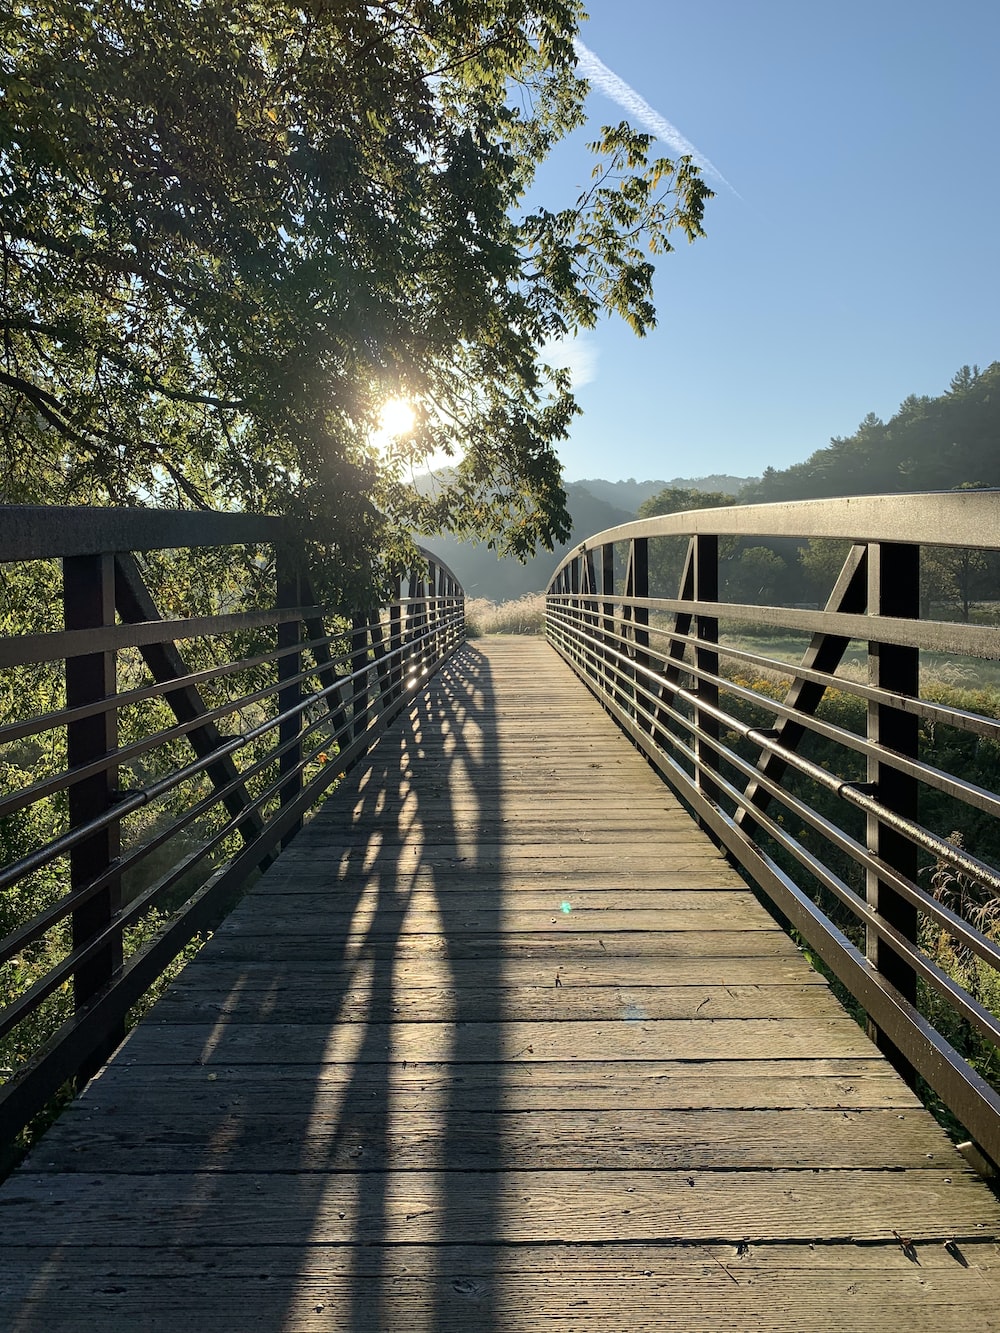 brown wooden bridge near green trees during daytime